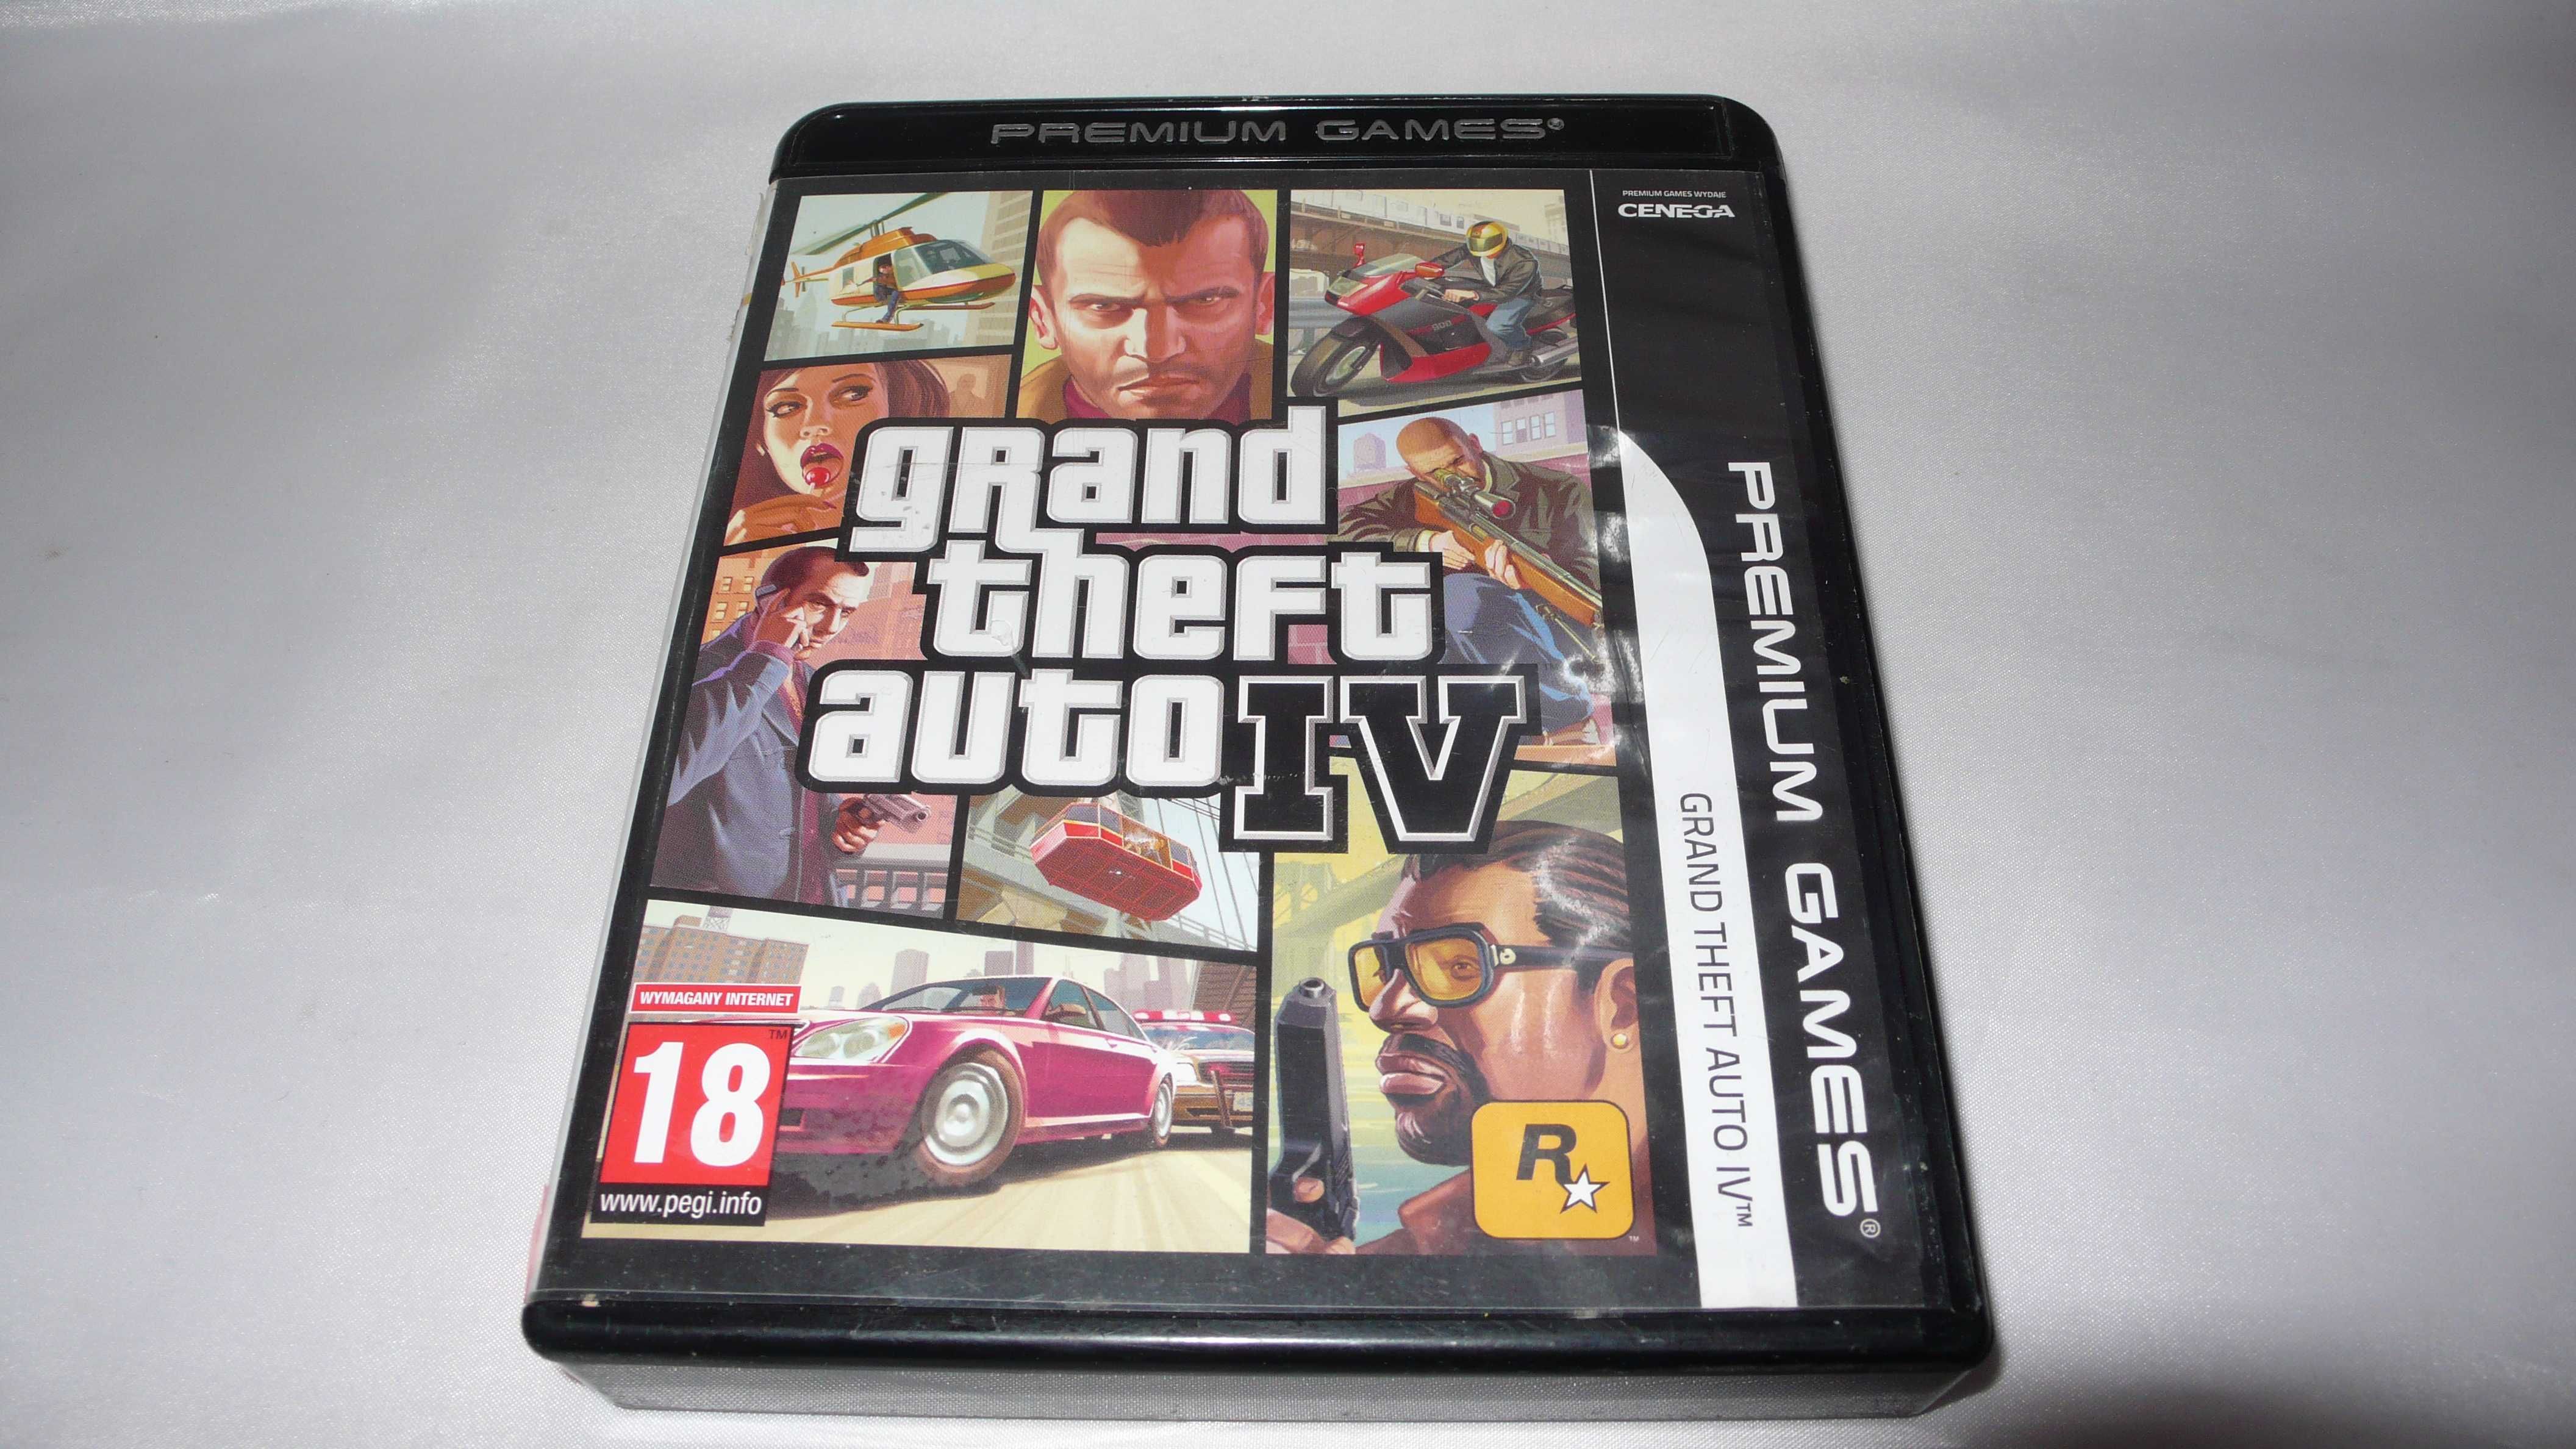 Gra do pc / laptop / GTA IV / Grand Theft Auto IV / unikat